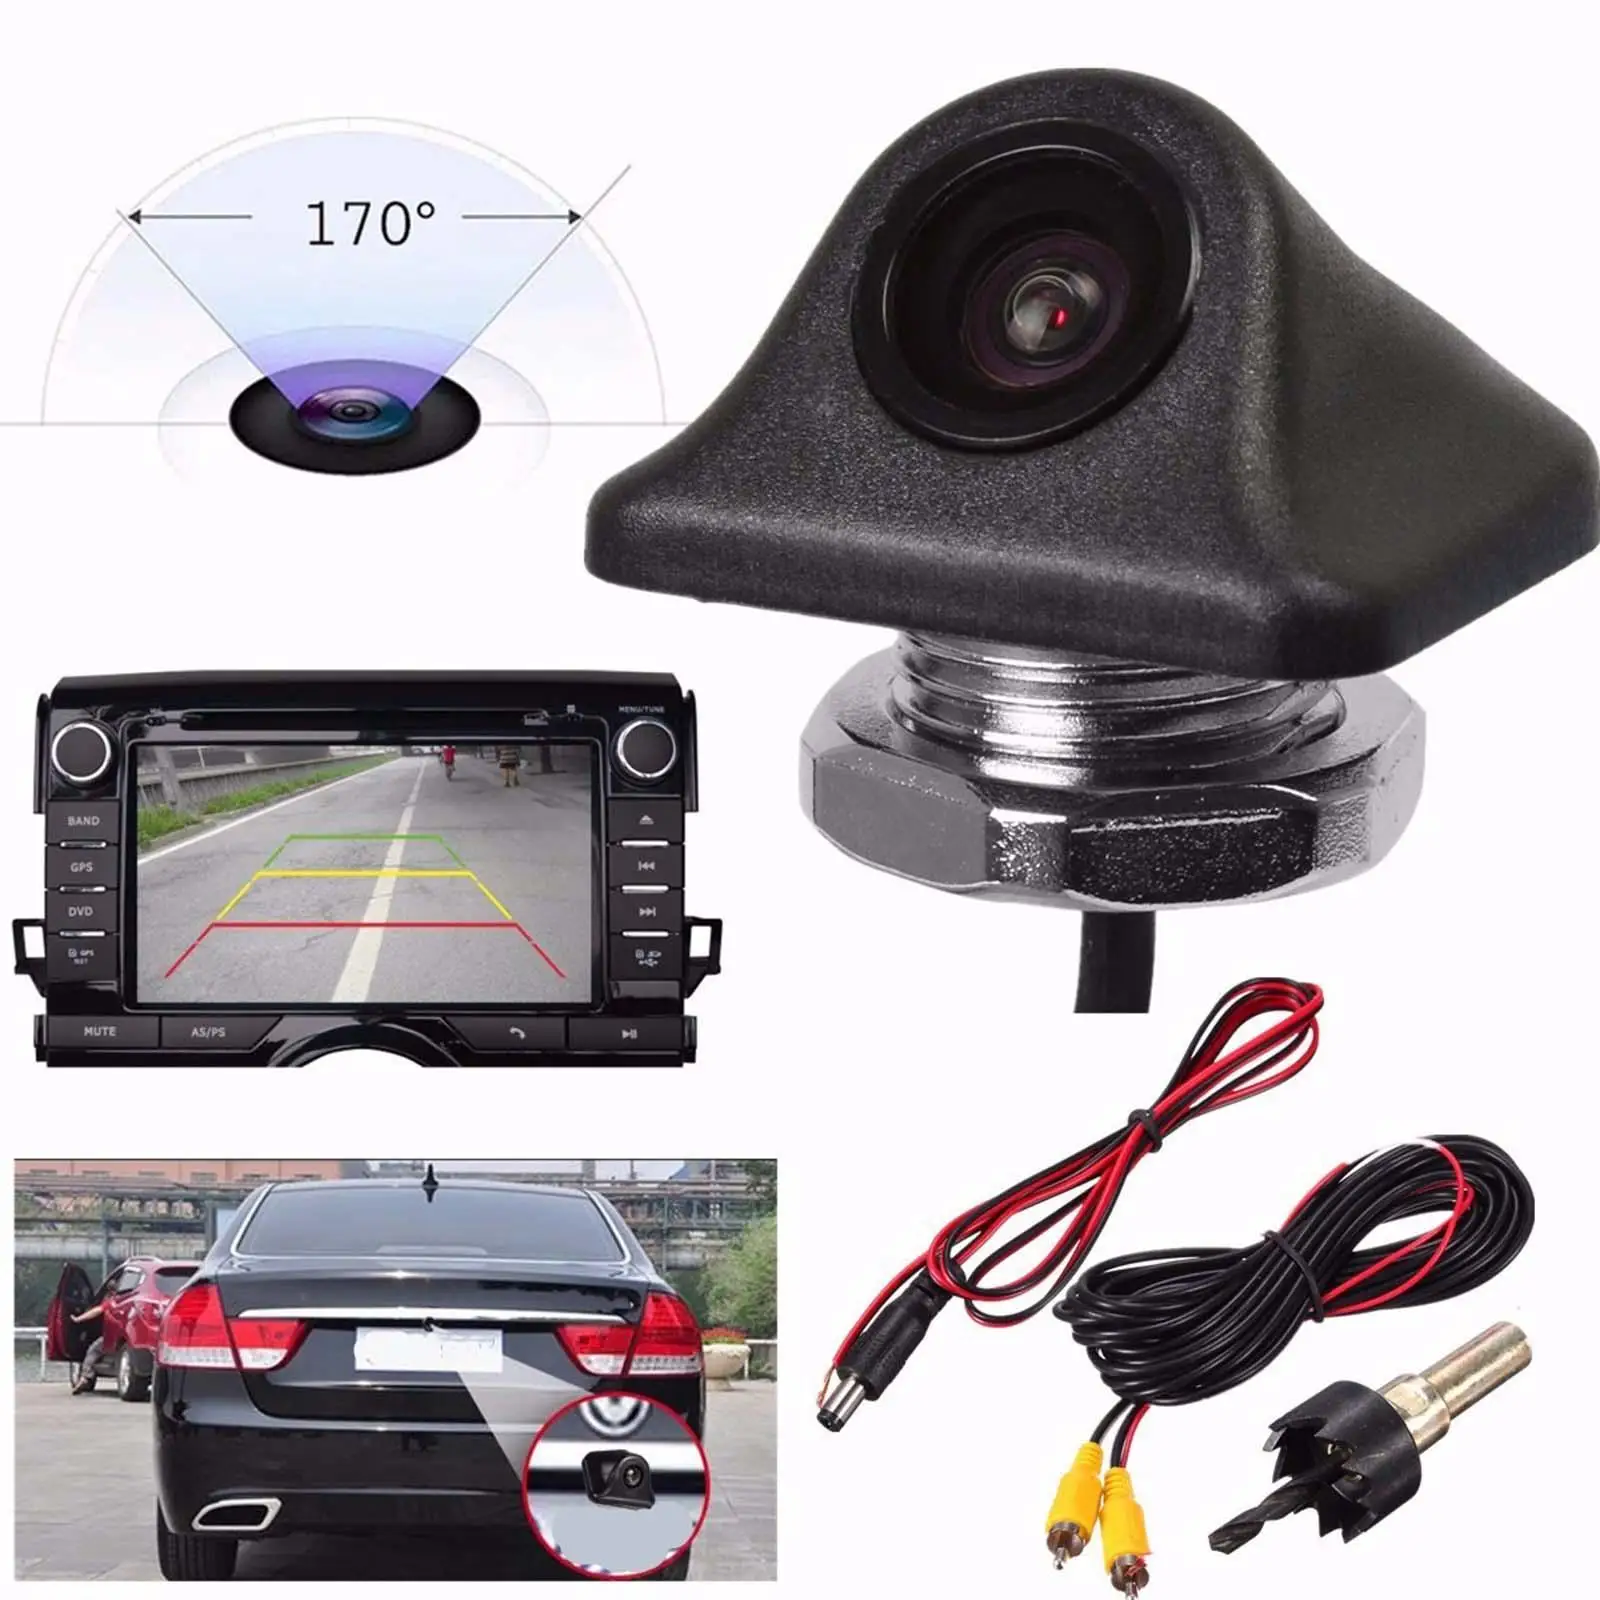 Car Rear View Camera High Sensitivity Parking Reverse Backup Camera for Car Truck Rv Bus Vehicle